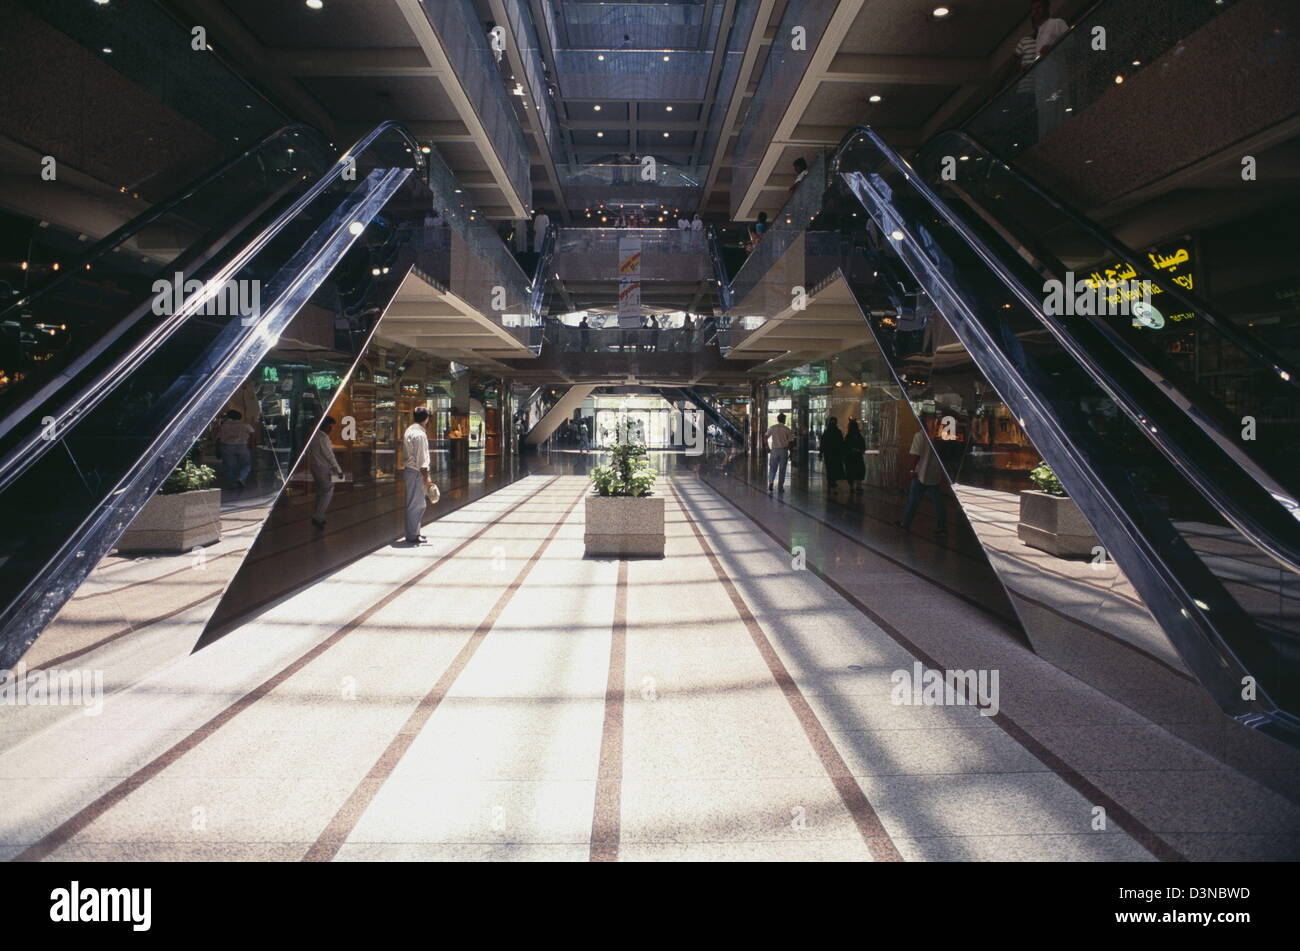 A modern indoor shopping mall in al khobar, saudi arabia. Stock Photo